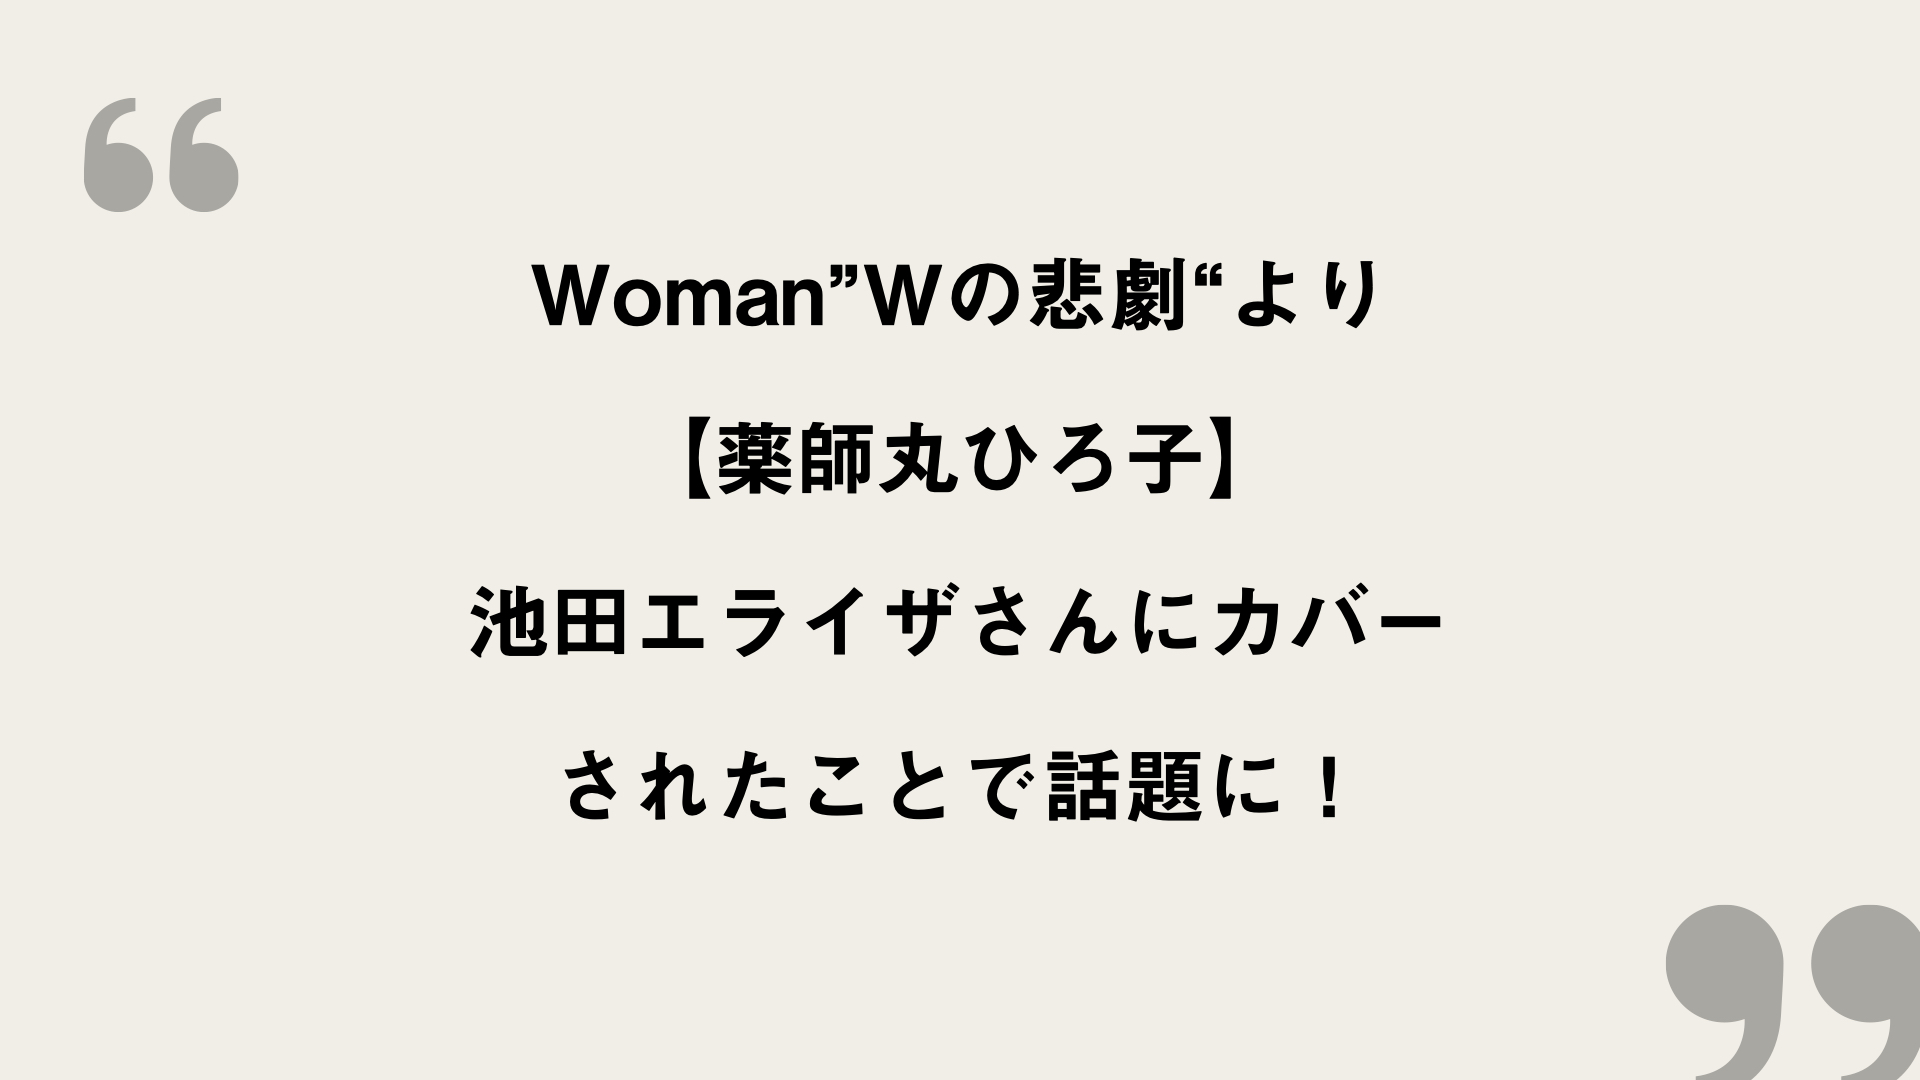 Woman Wの悲劇 より 薬師丸ひろ子 歌詞の意味を考察 池田エライザさんにカバーされたことで話題に Framu Media